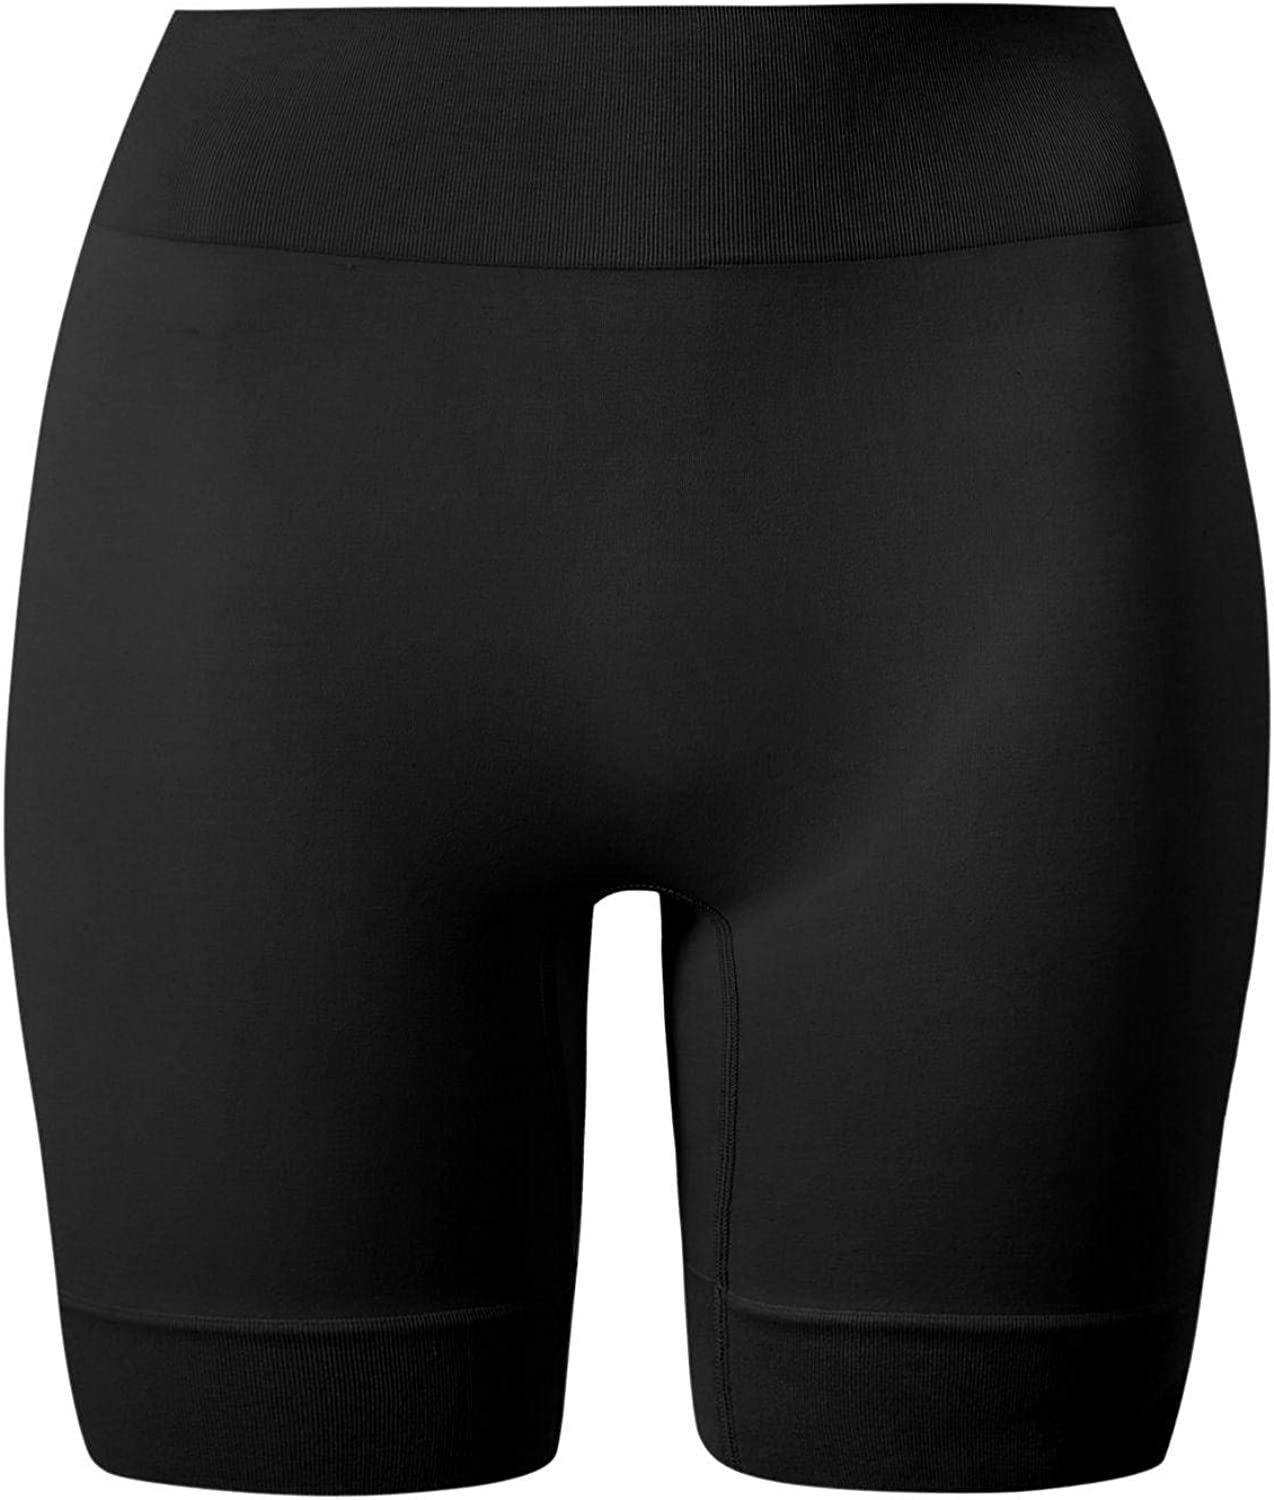 Marks & Spencer Women's Cool Comfort Anti Rub Shaping Mid Length Short Panty - Black, 12-14